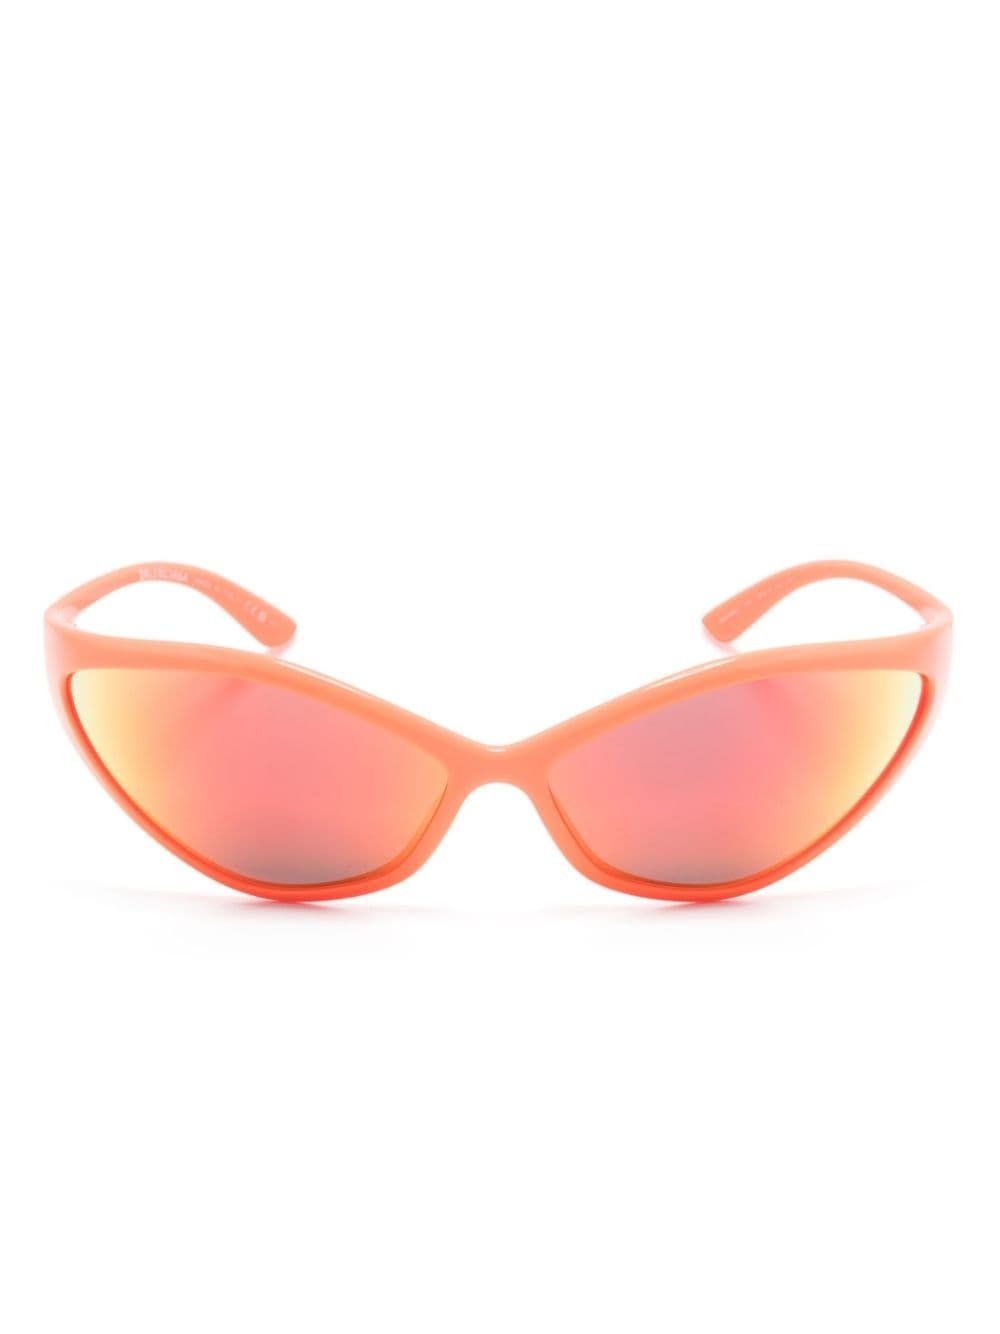 90s oval sunglasses - 1